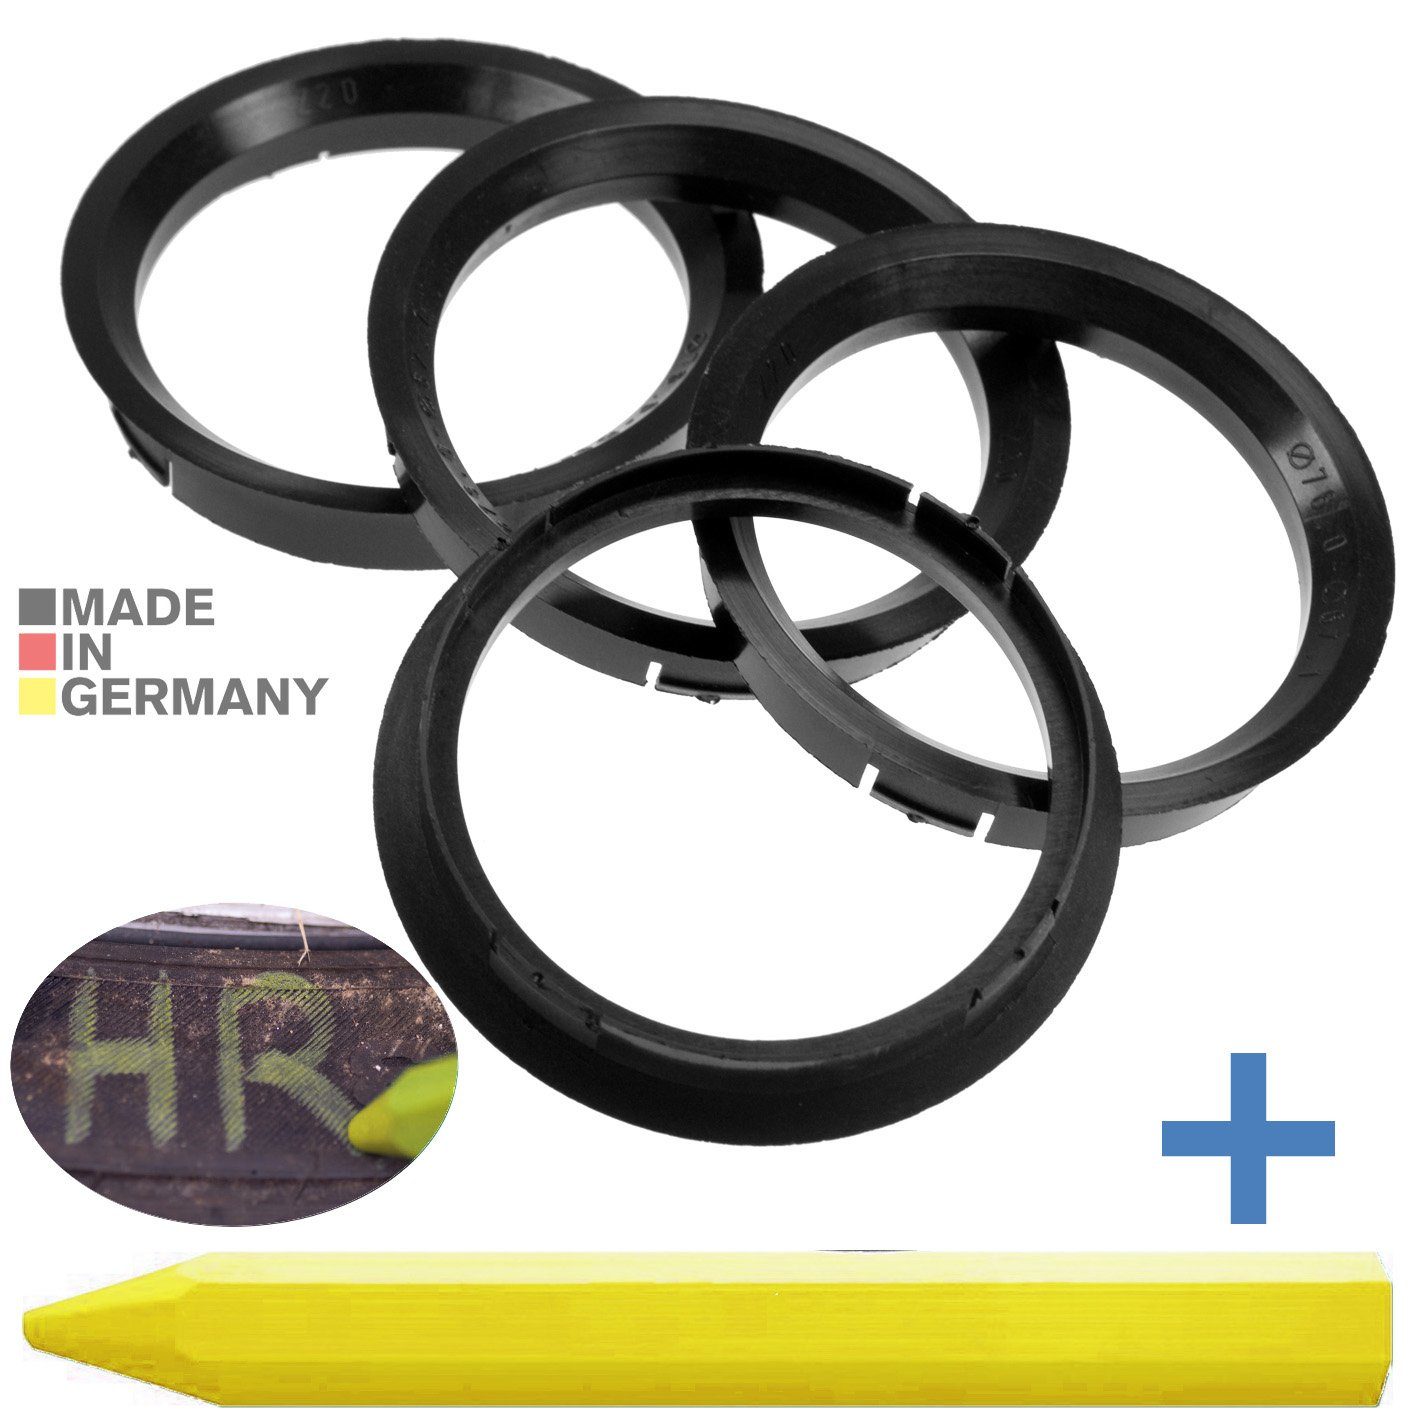 RKC Reifenstift 4X Zentrierringe Schwarz Felgen Ringe + 1x Reifen Kreide Fett Stift, Maße: 76,0 x 67,1 mm